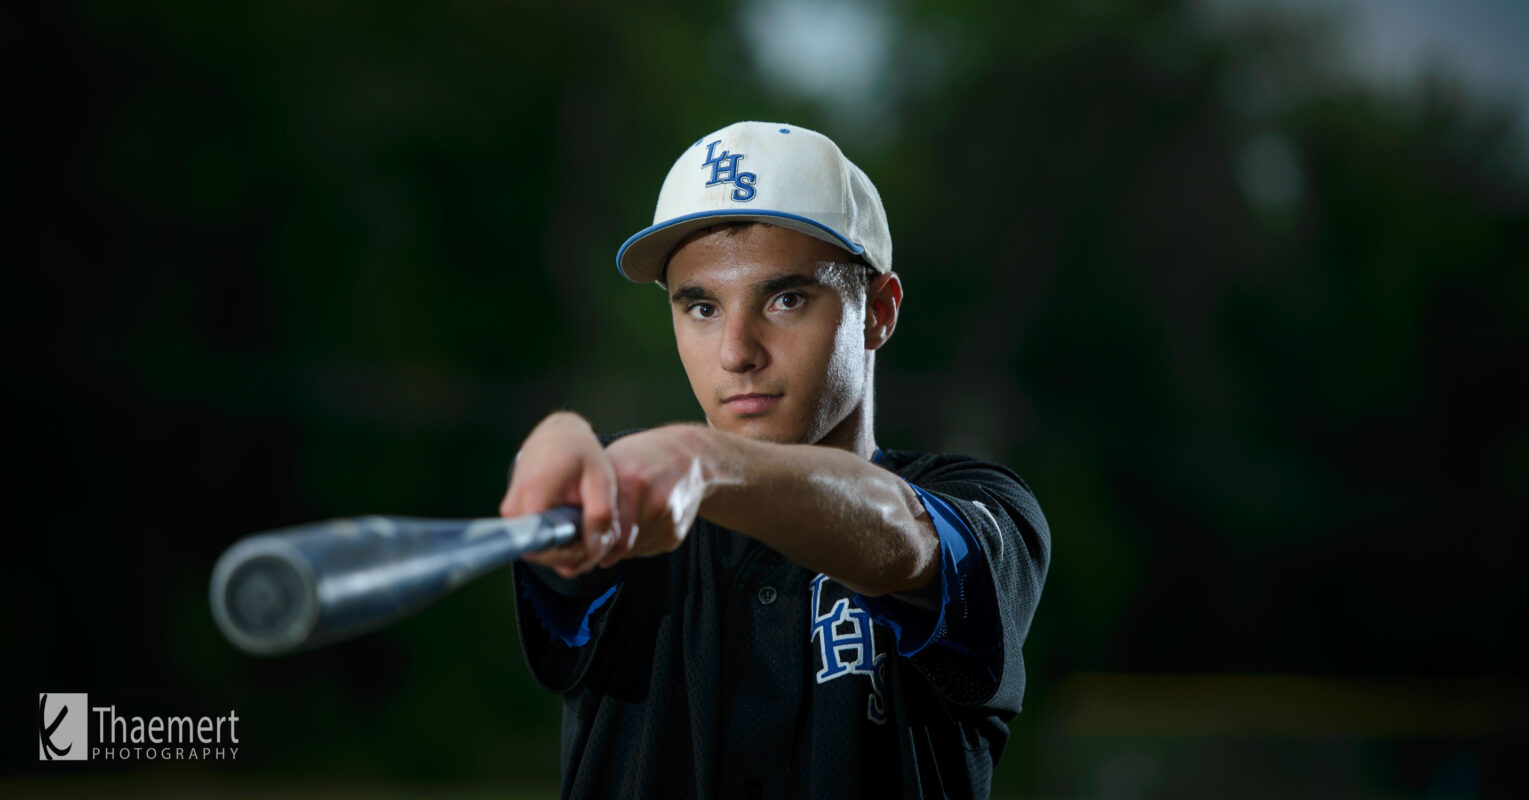 High School Senior Baseball Player with his Bat